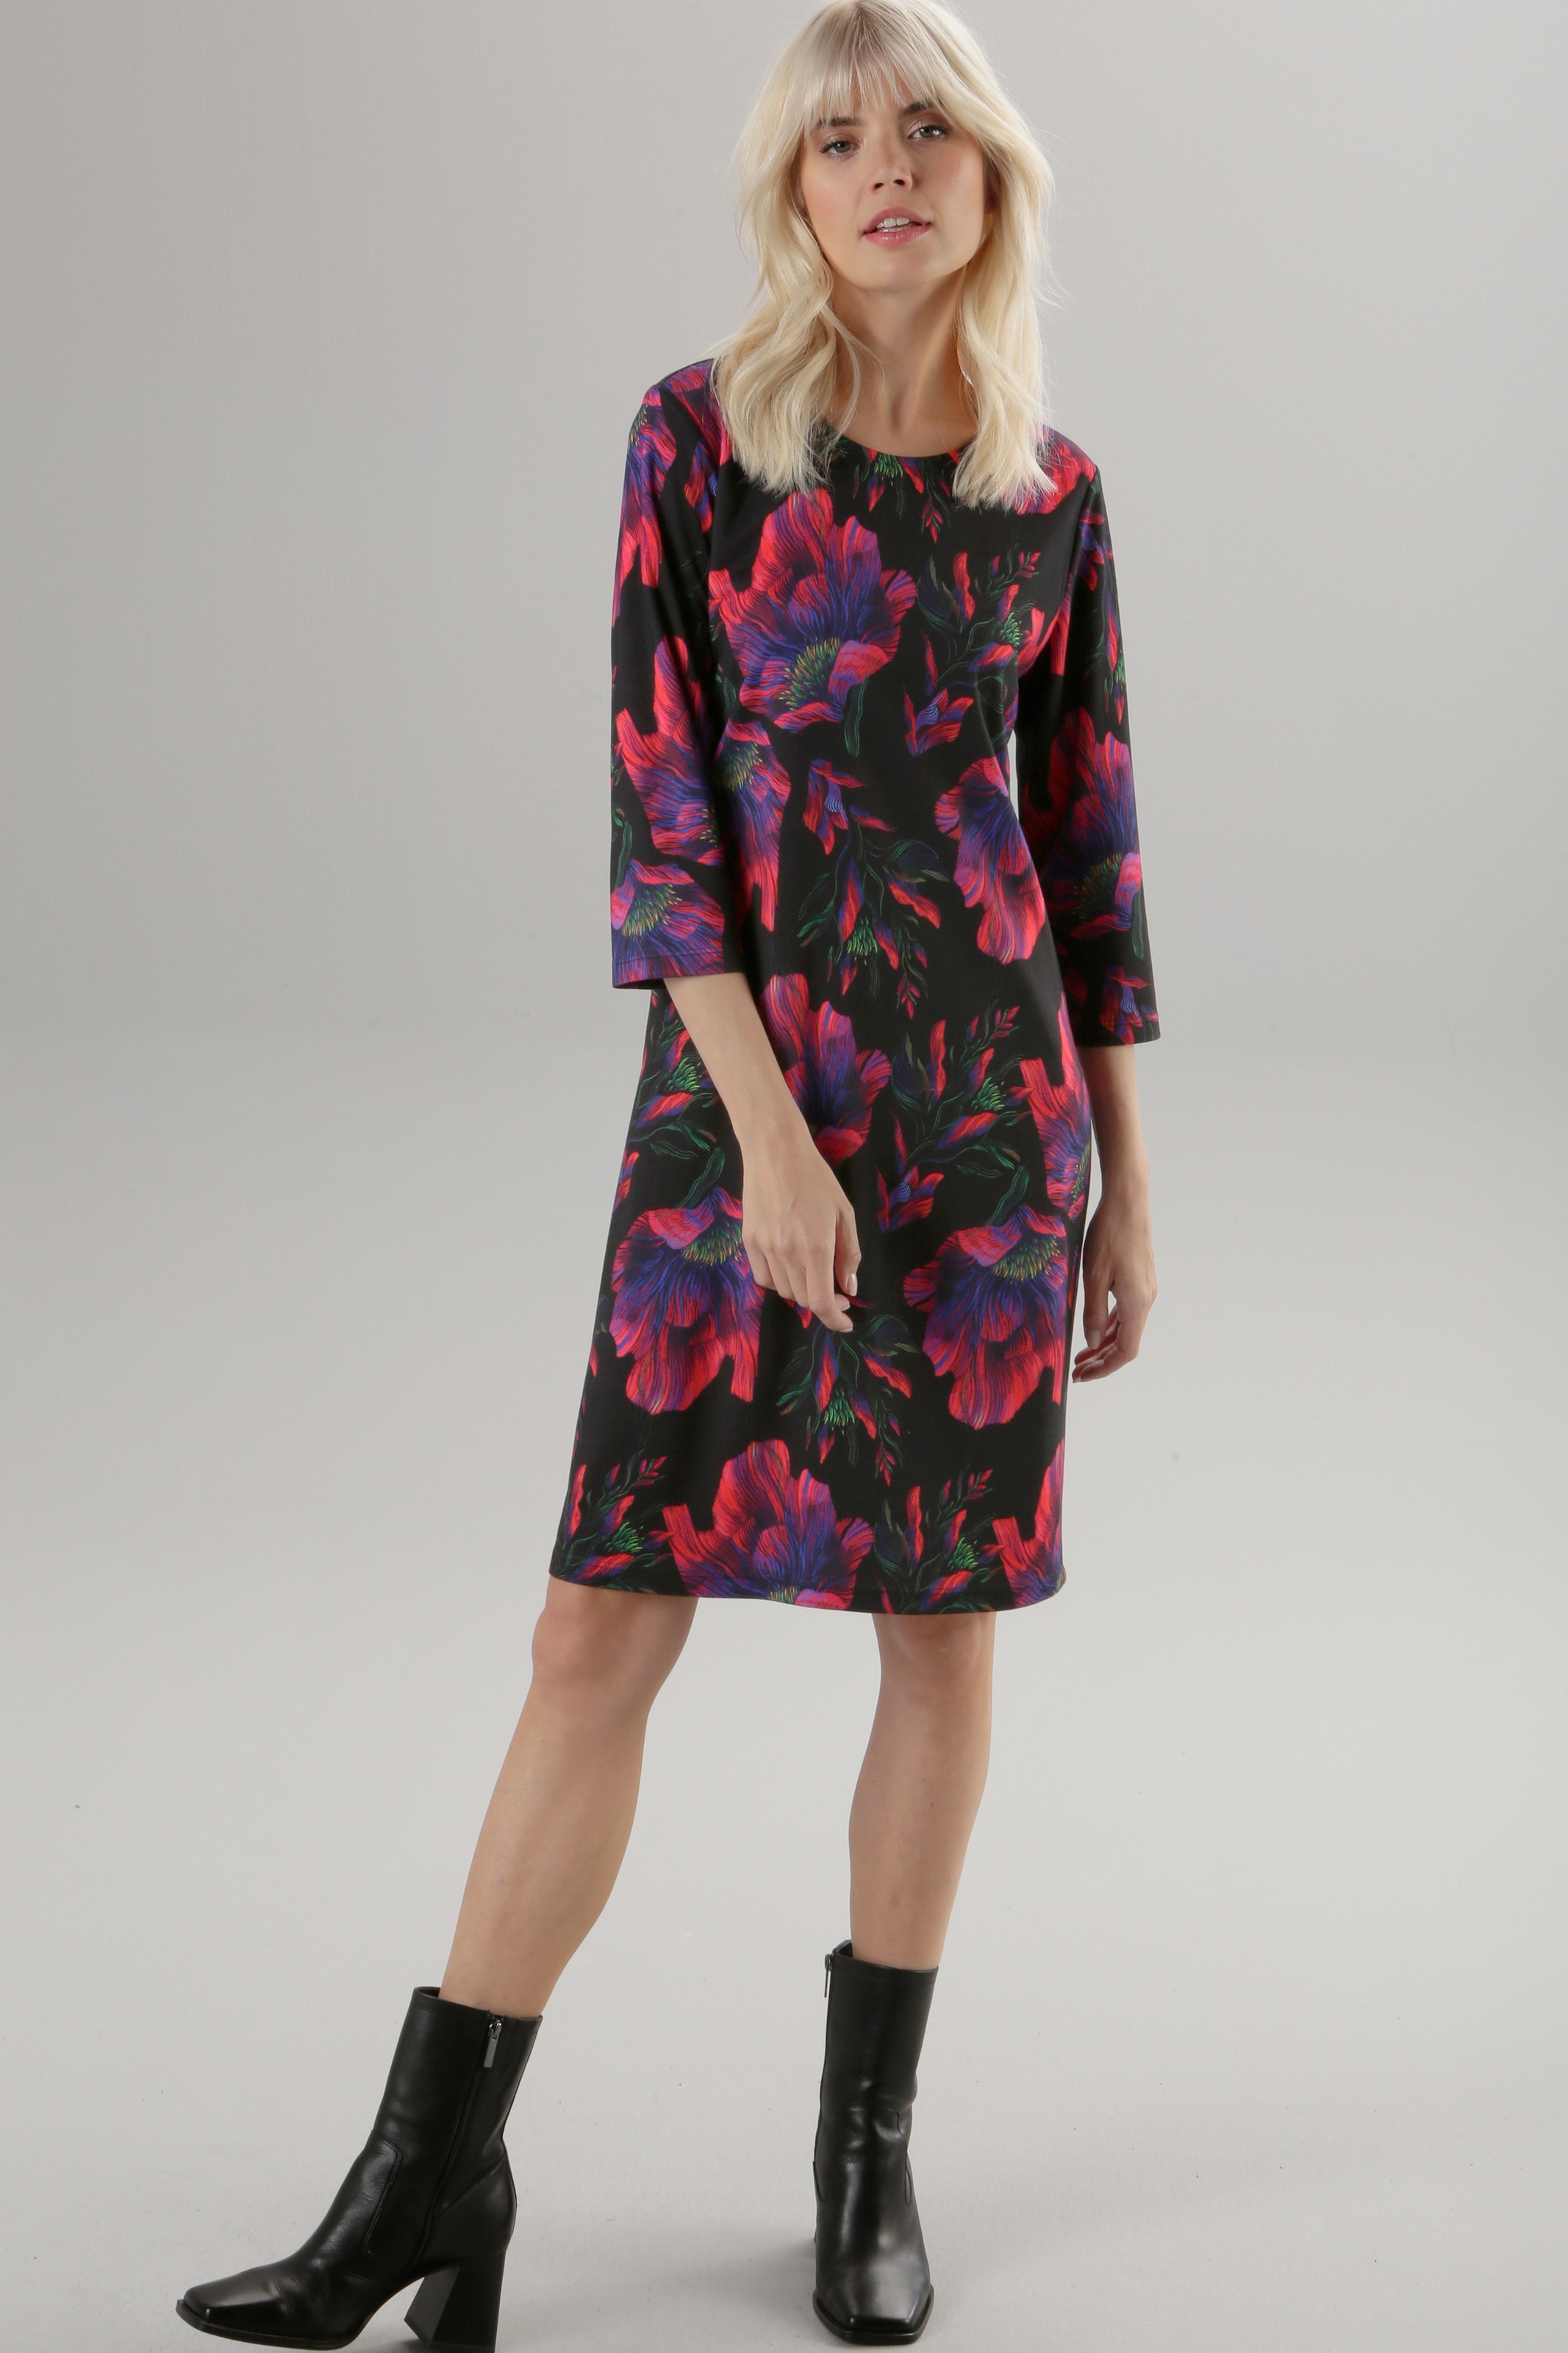 Aniston SELECTED Jerseykleid, Knallfarben in mit Blumendruck bei